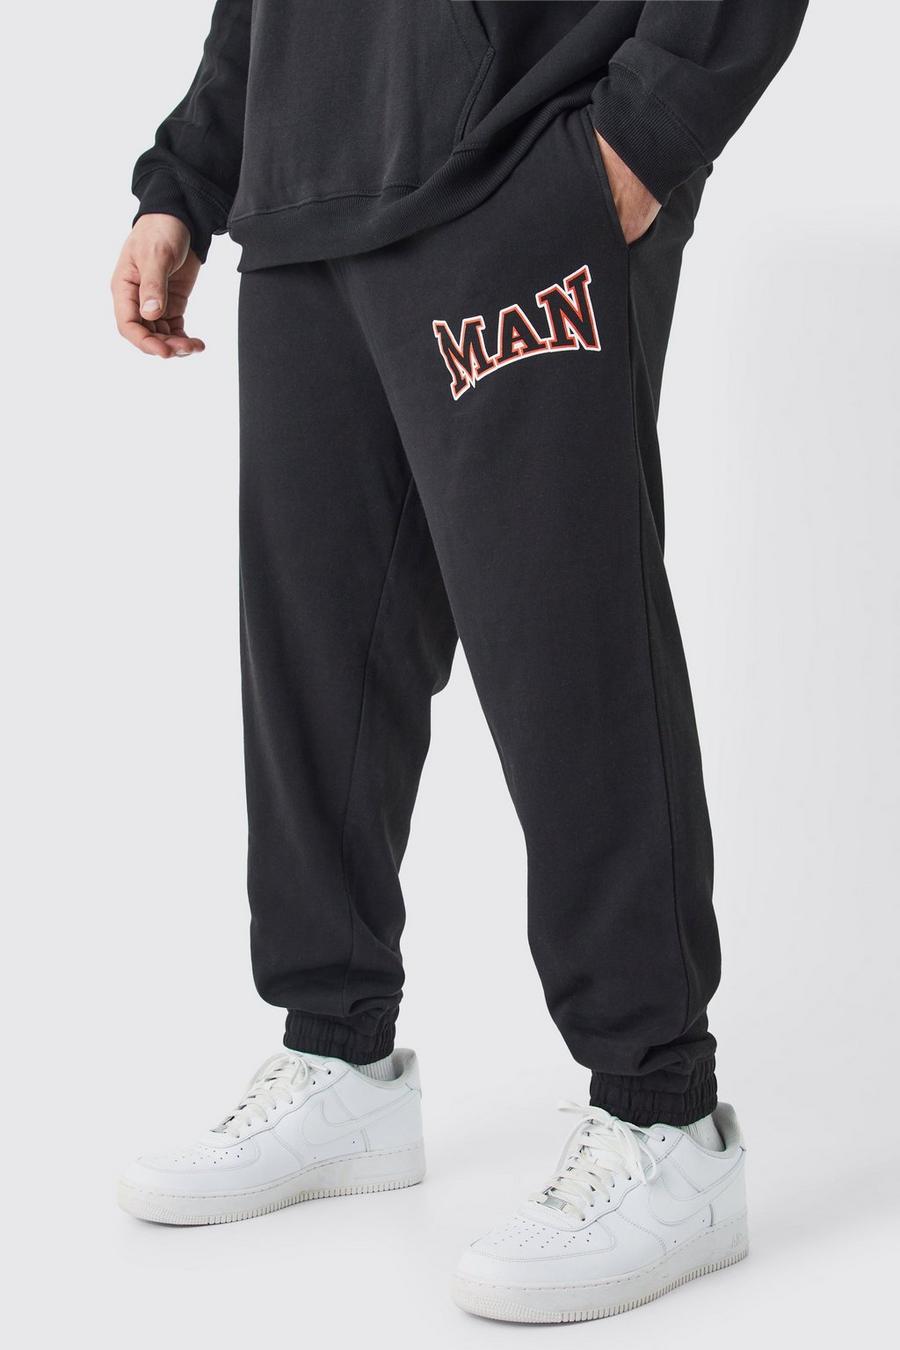 Pantalón deportivo Plus MAN universitario negro, Black image number 1